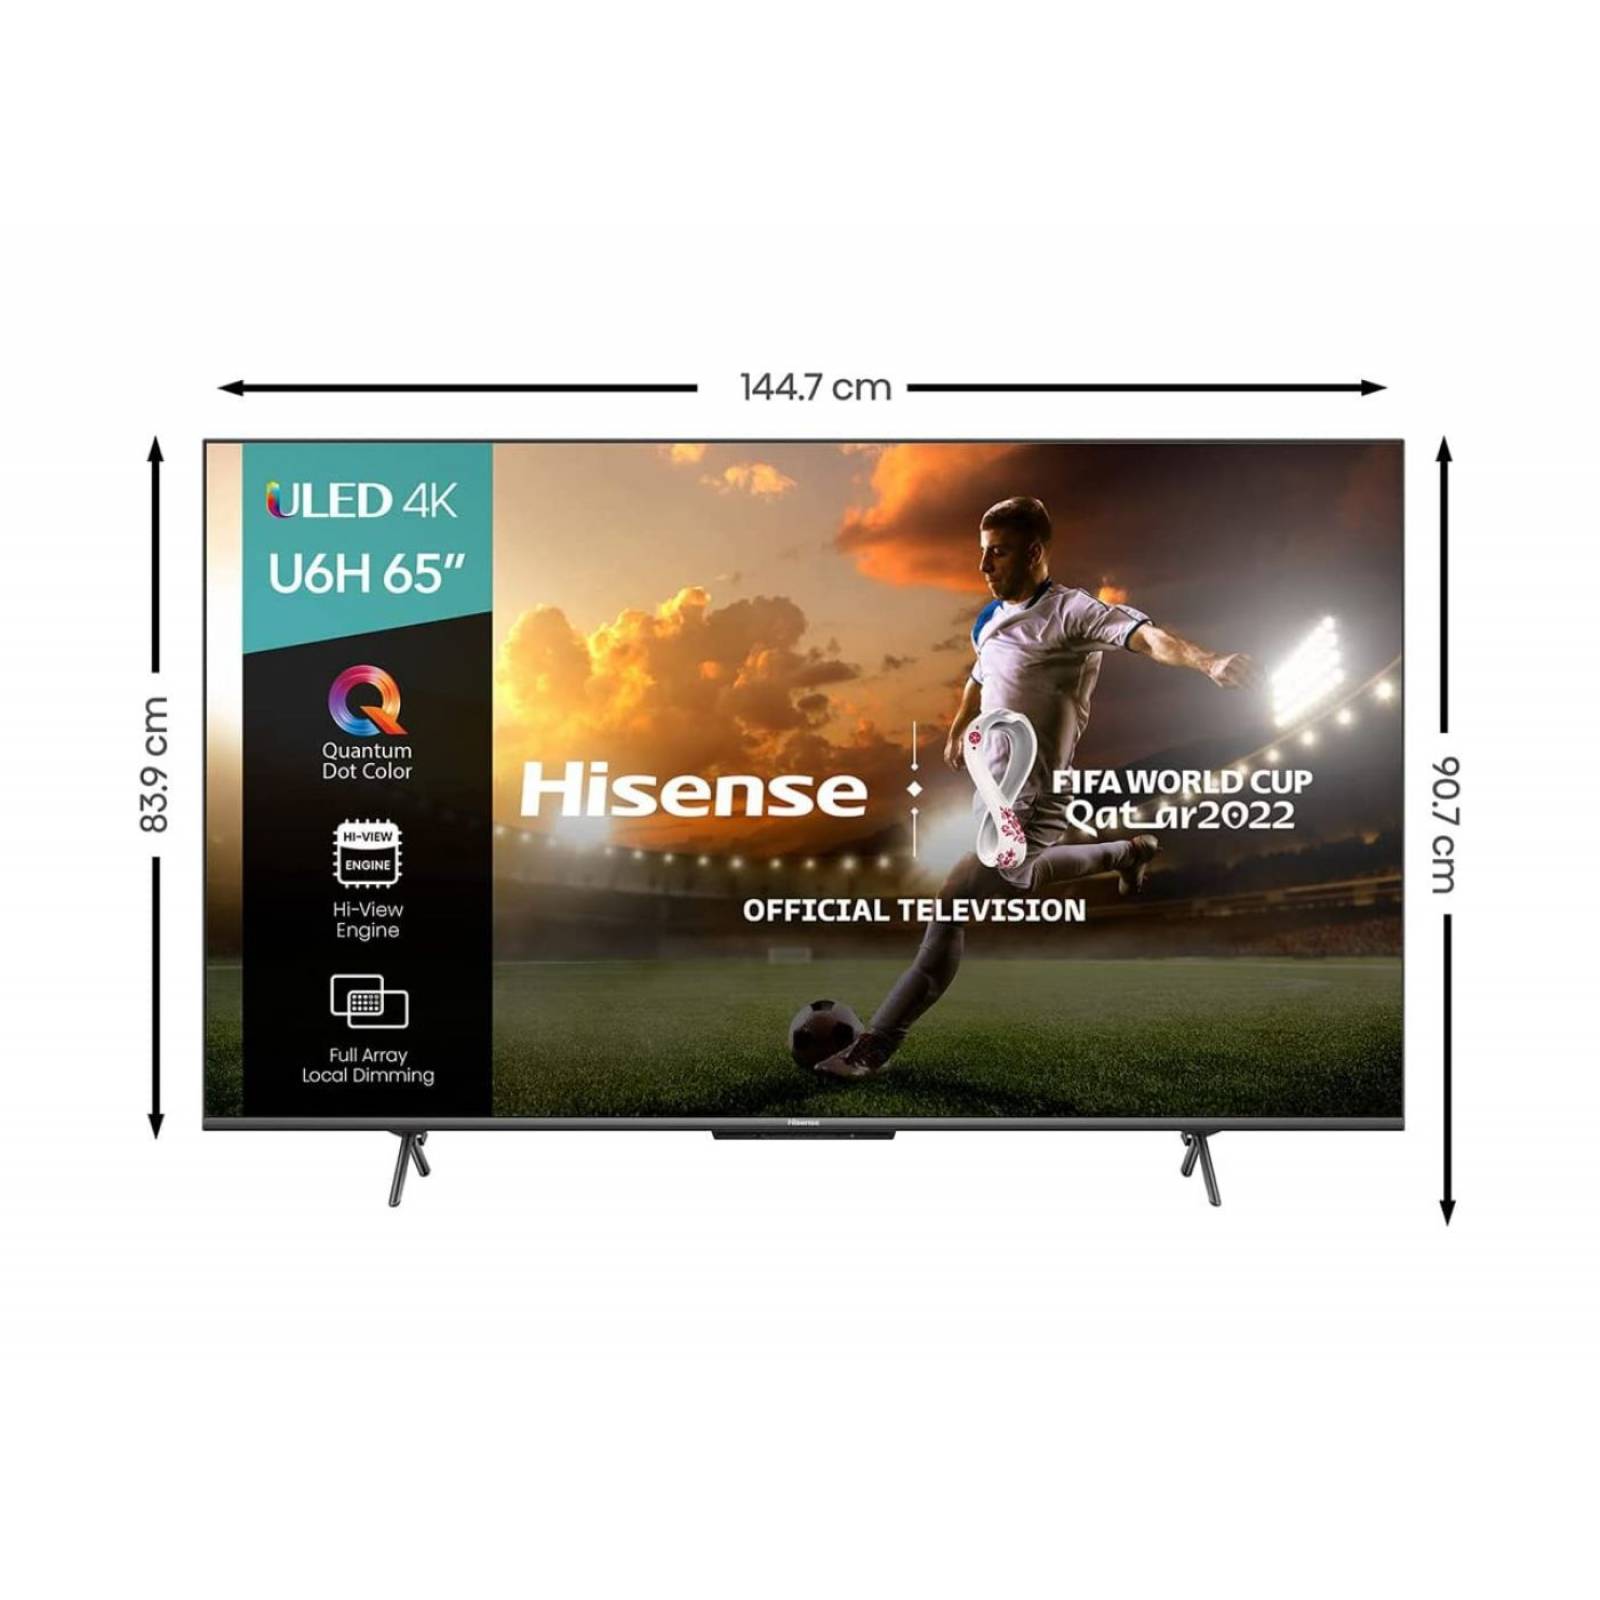  Hisense ULED 4K Premium 65U6H Quantum Dot QLED Series Smart  Google TV de 65 pulgadas, Dolby Vision Atmos, control remoto por voz,  compatible con Alexa (modelo 2022), negro